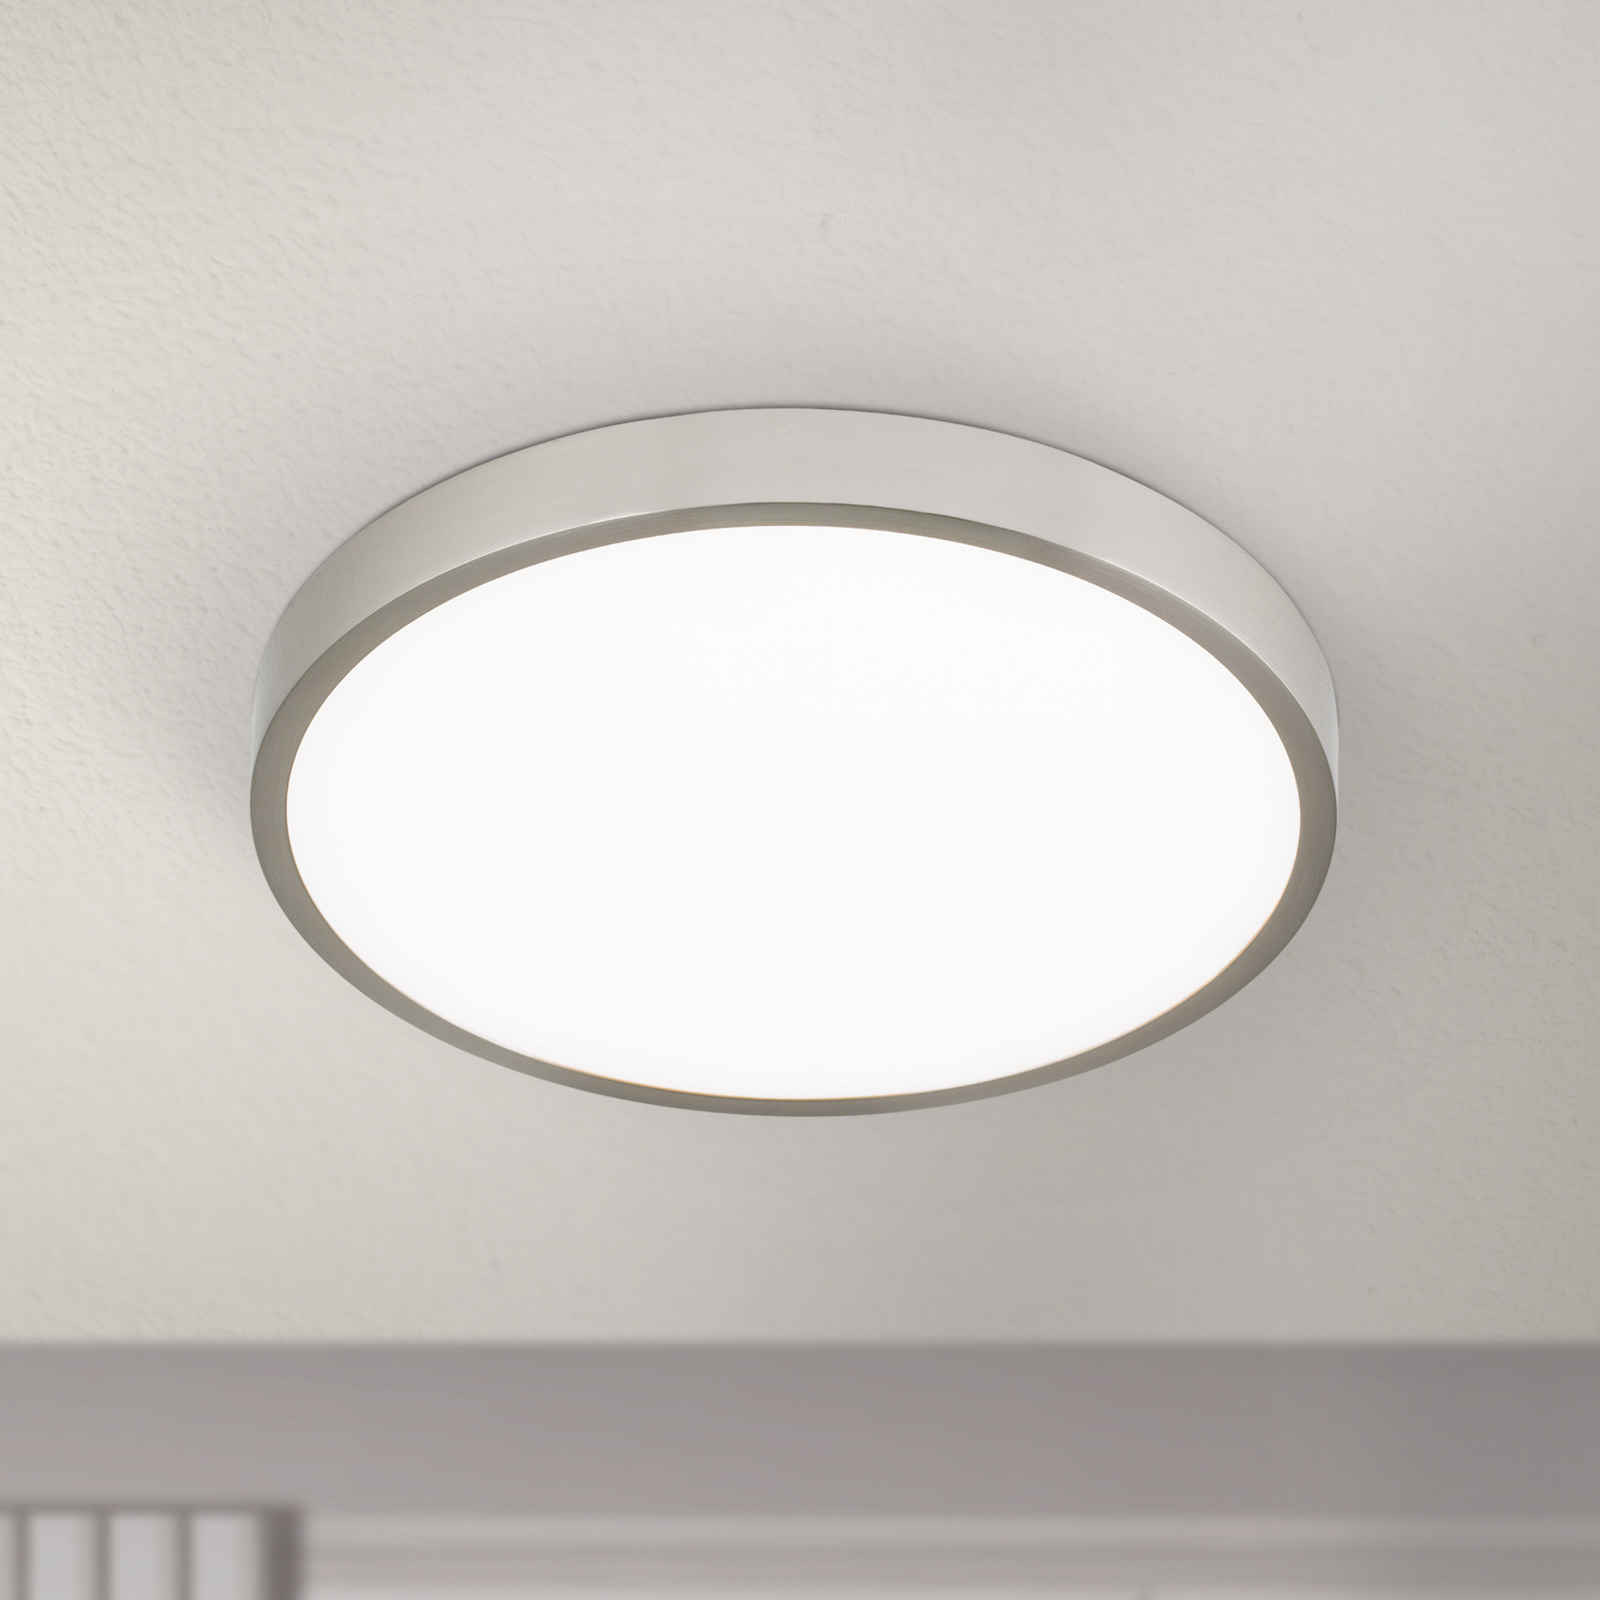 LED ceiling light Bully, matt nickel, Ø 28 cm